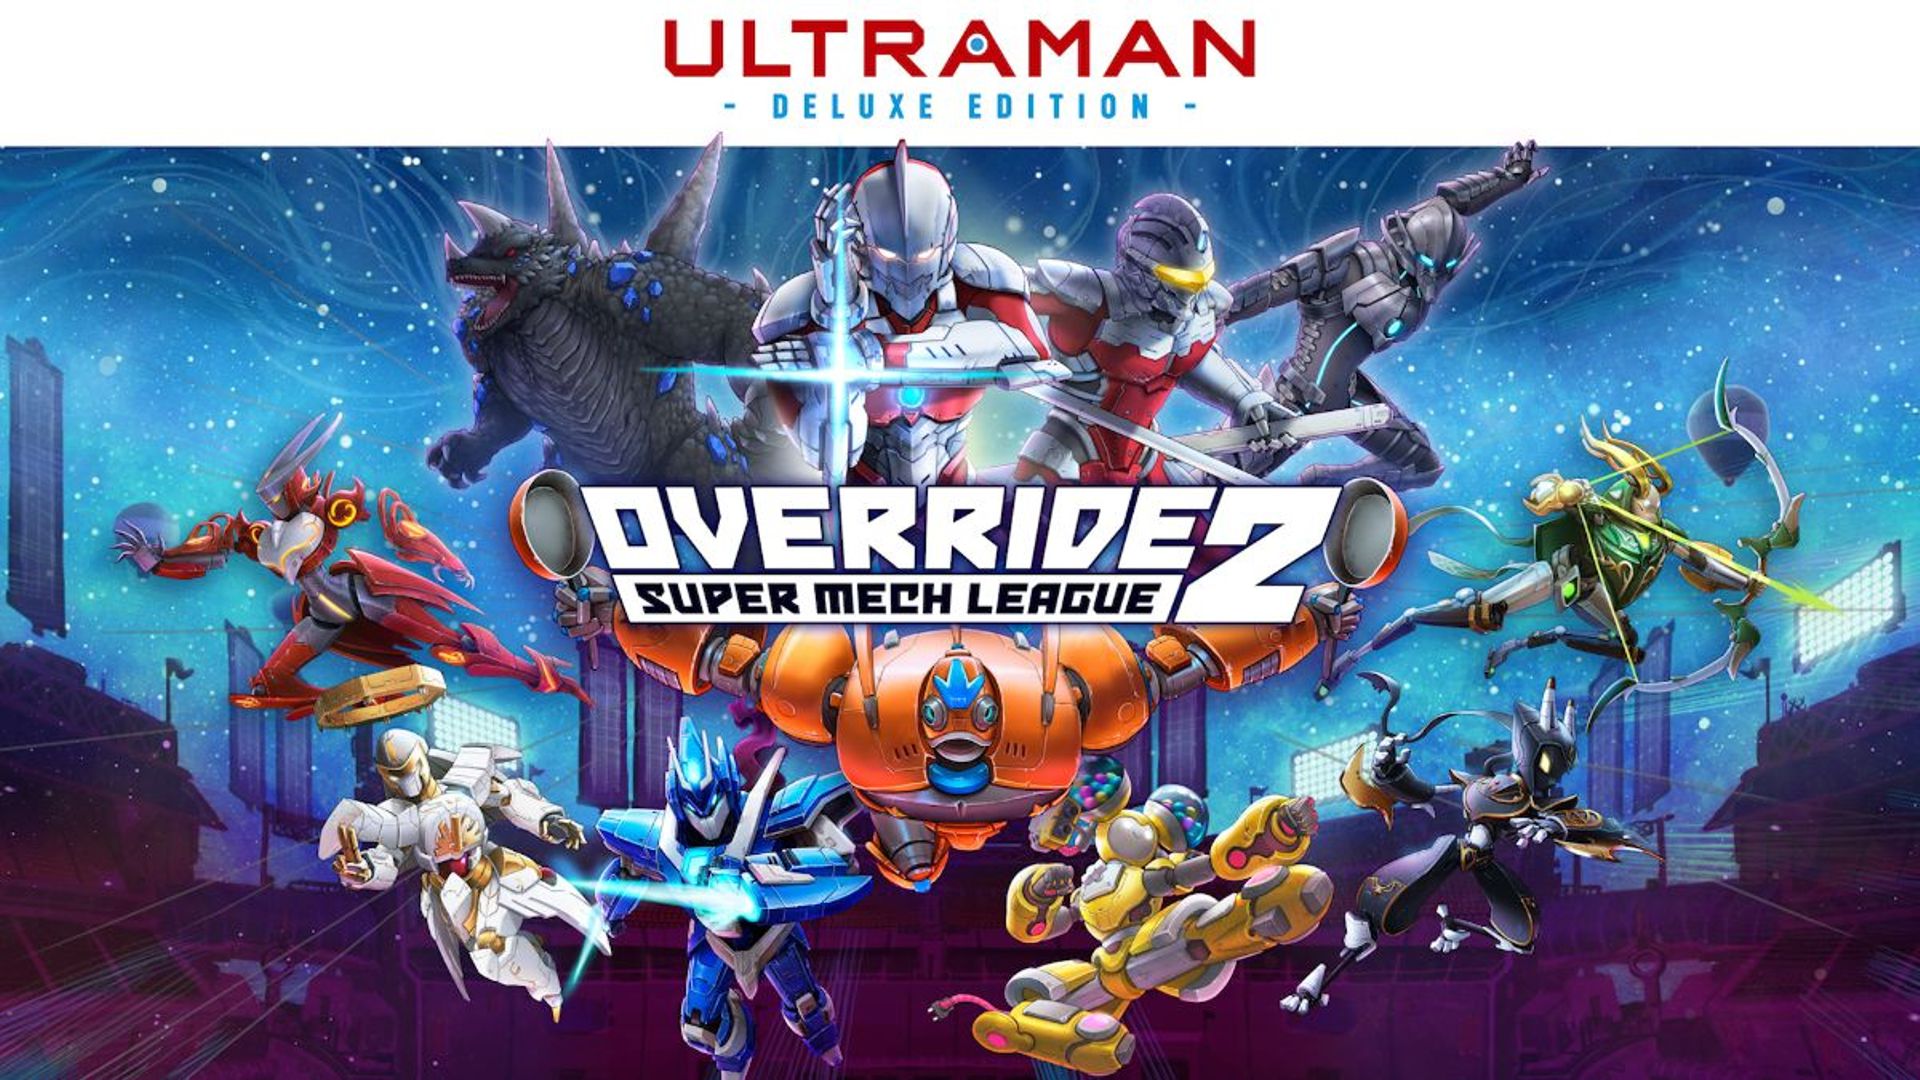 Override 2 Super Mech League - ULTRAMAN Deluxe Edition